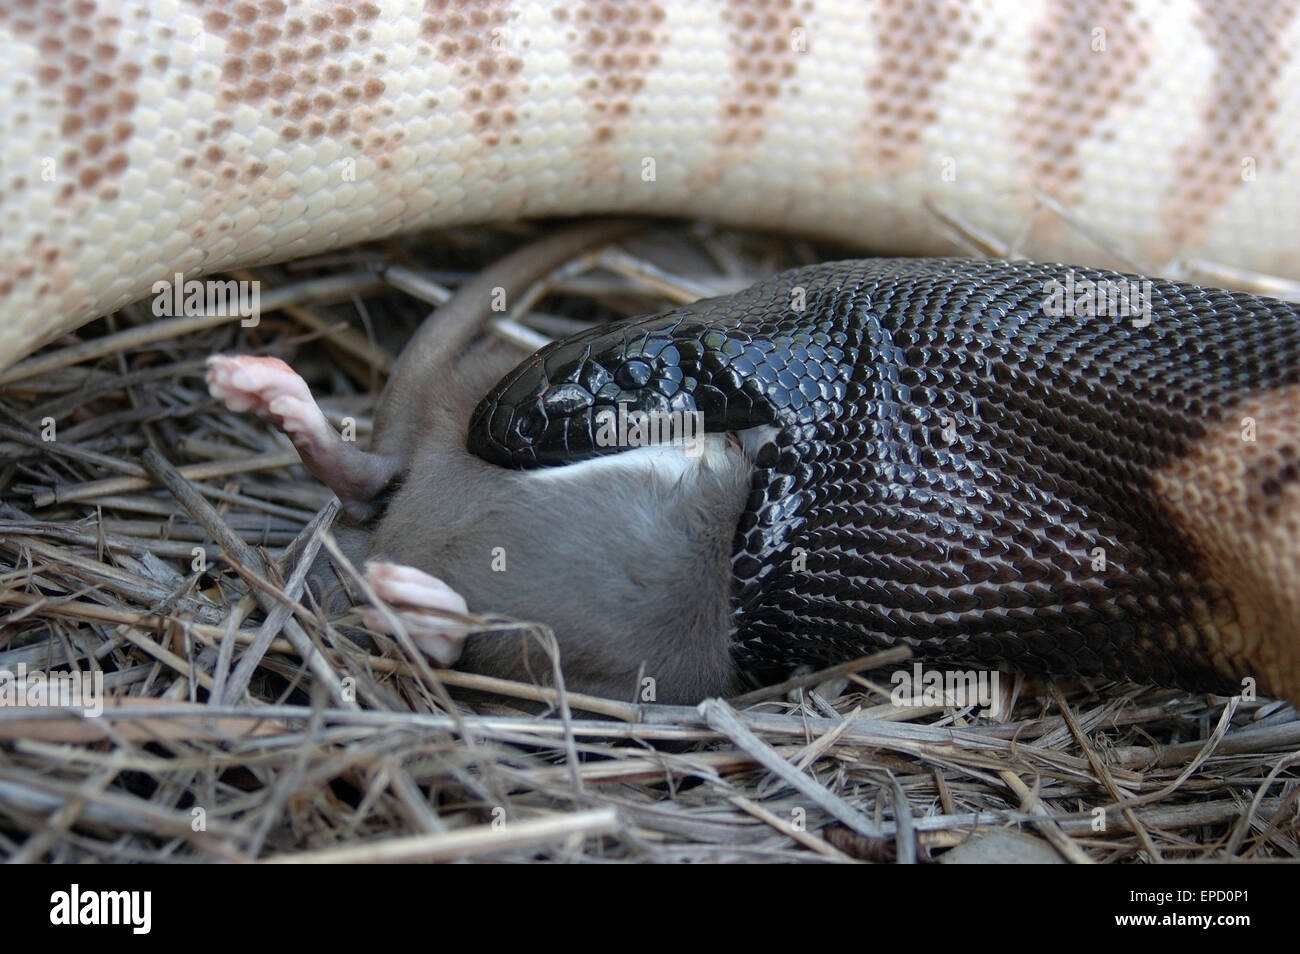 Australian black headed python, Aspidites melanocephalus, swallowing a black rat, Rattus rattus Stock Photo